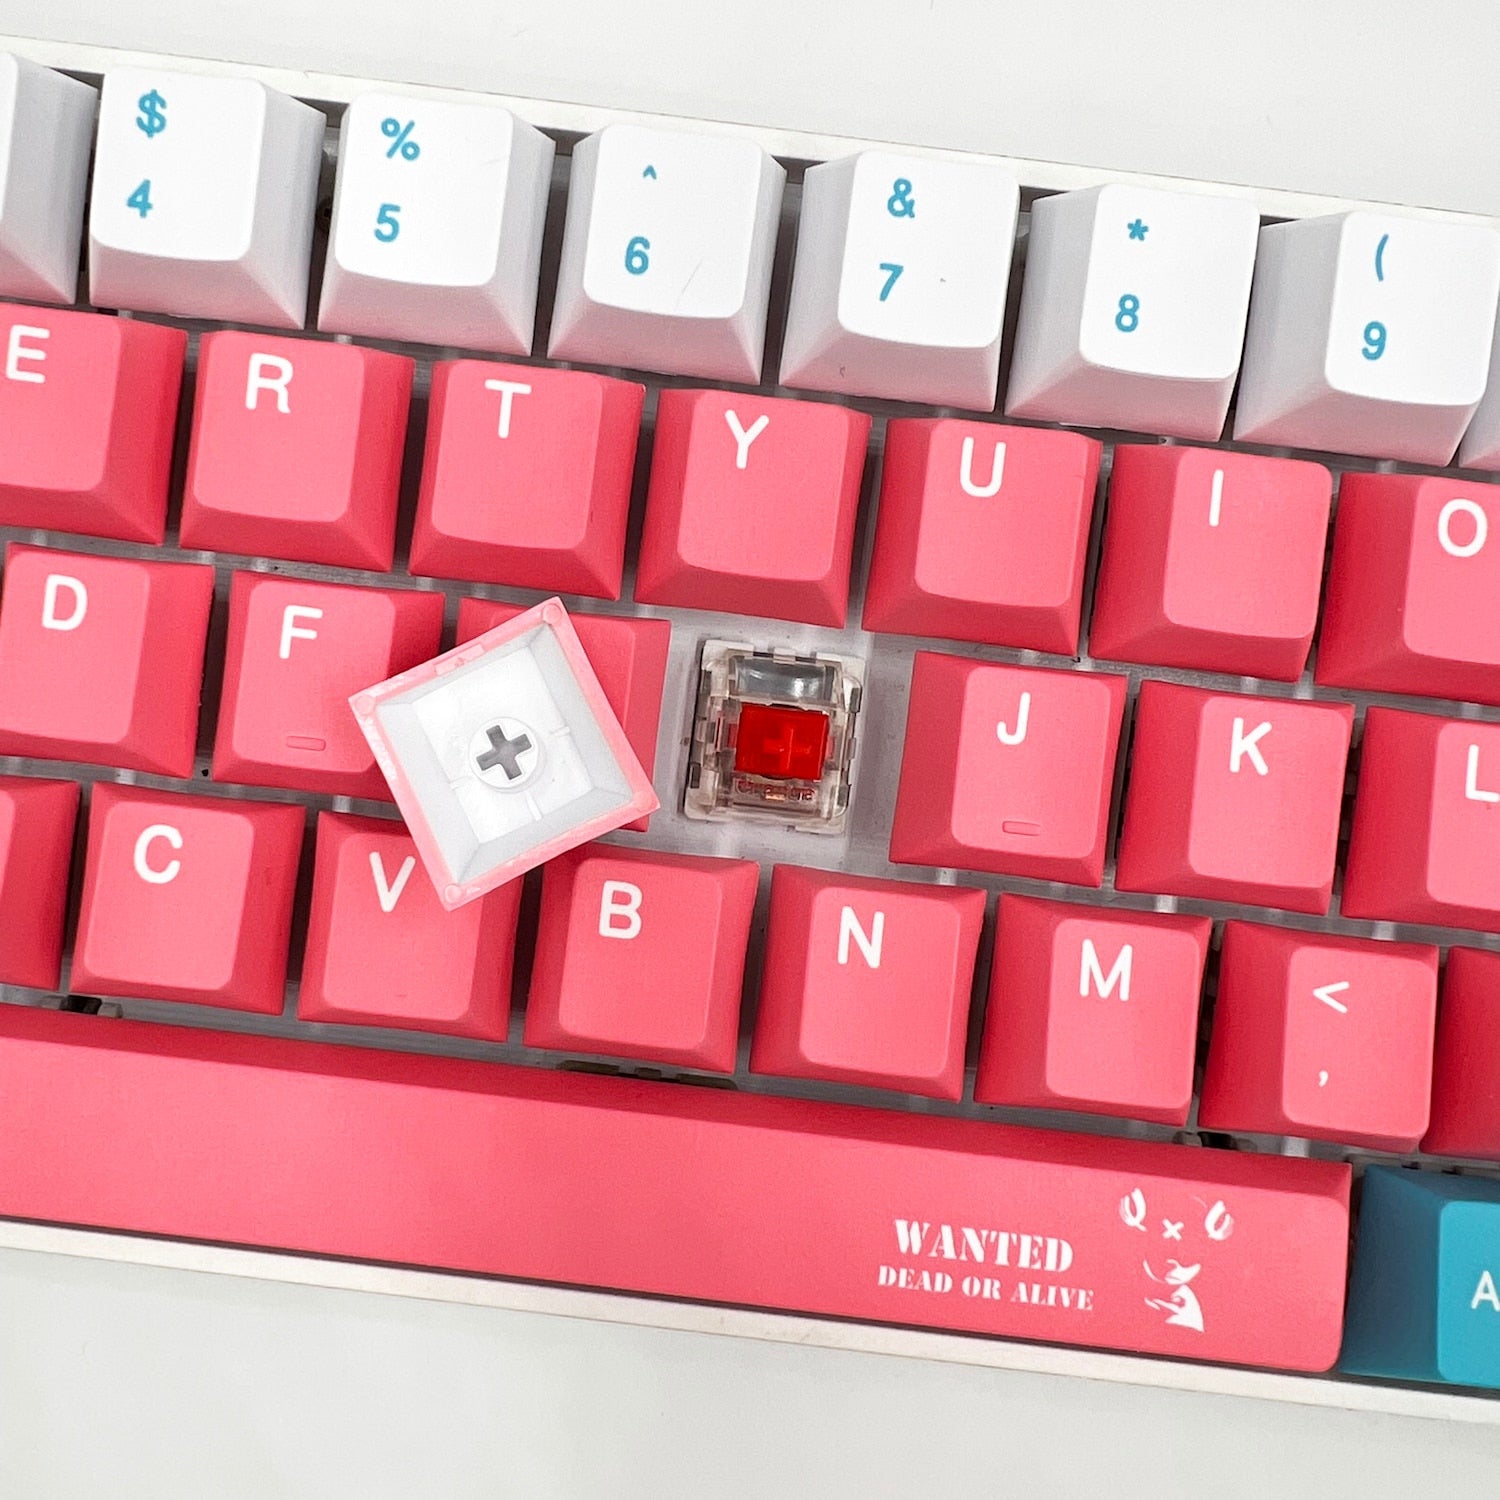 One Piece Mechanical Keyboard Cap Set (108 Keys)